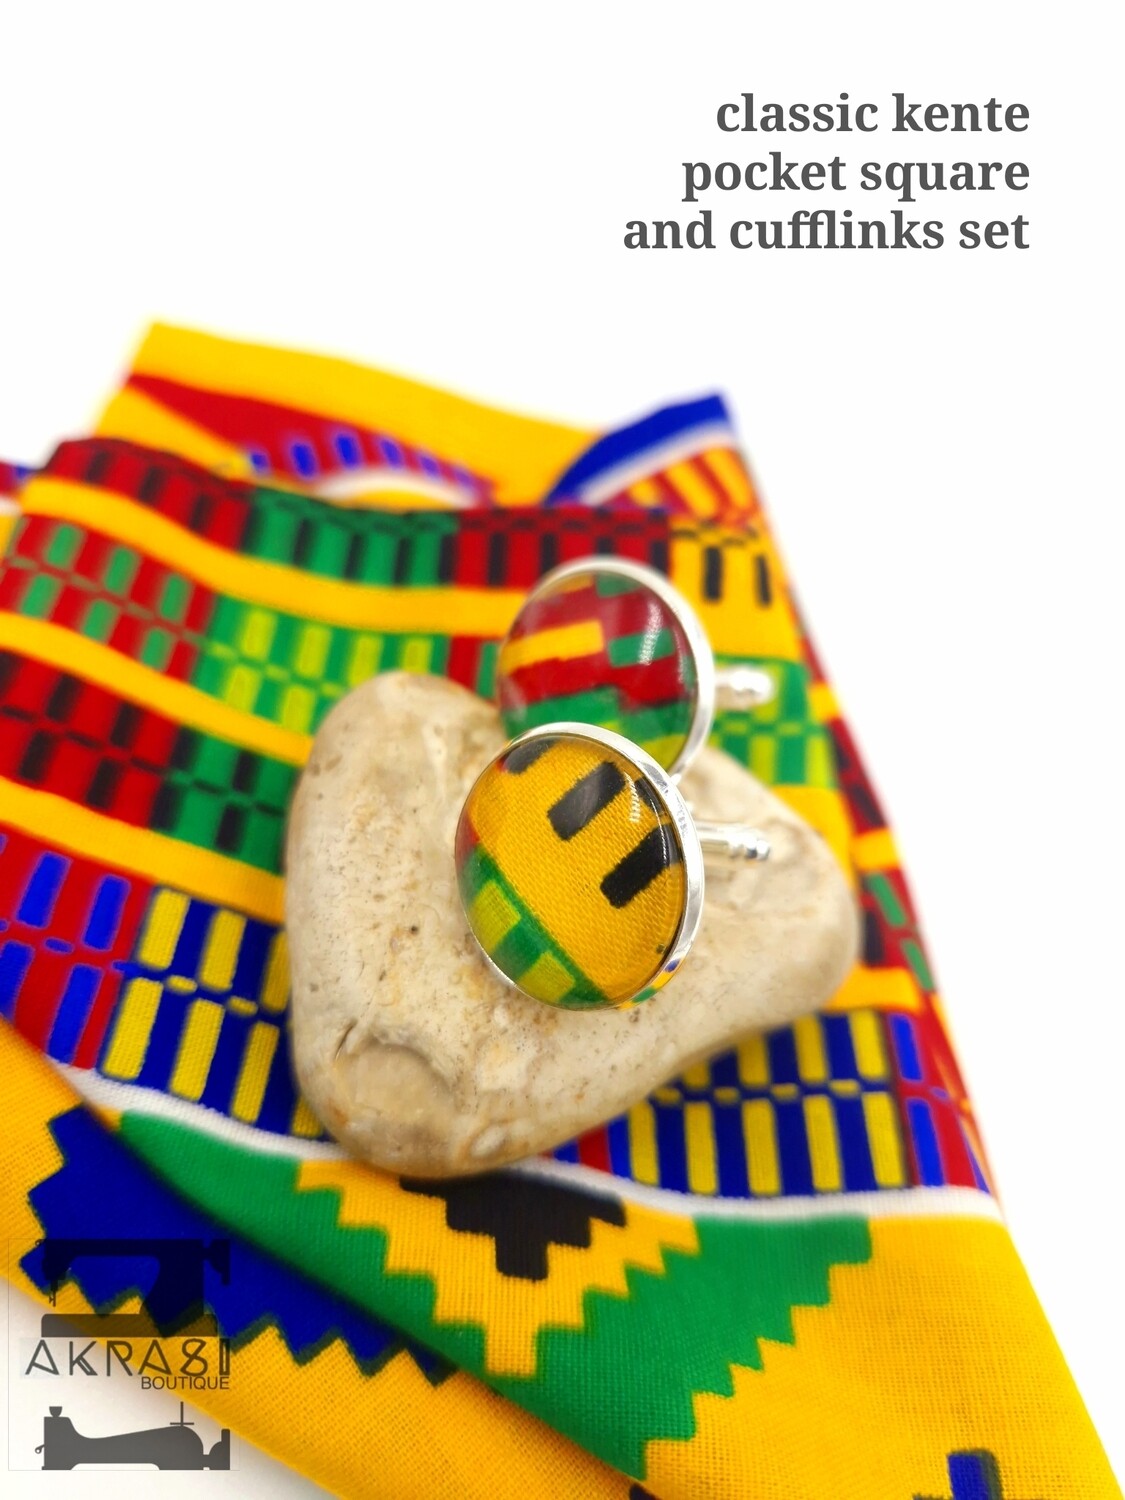 Kente wax print pocket square with cufflinks | men's accessories | Kente pocket square and cufflinks set